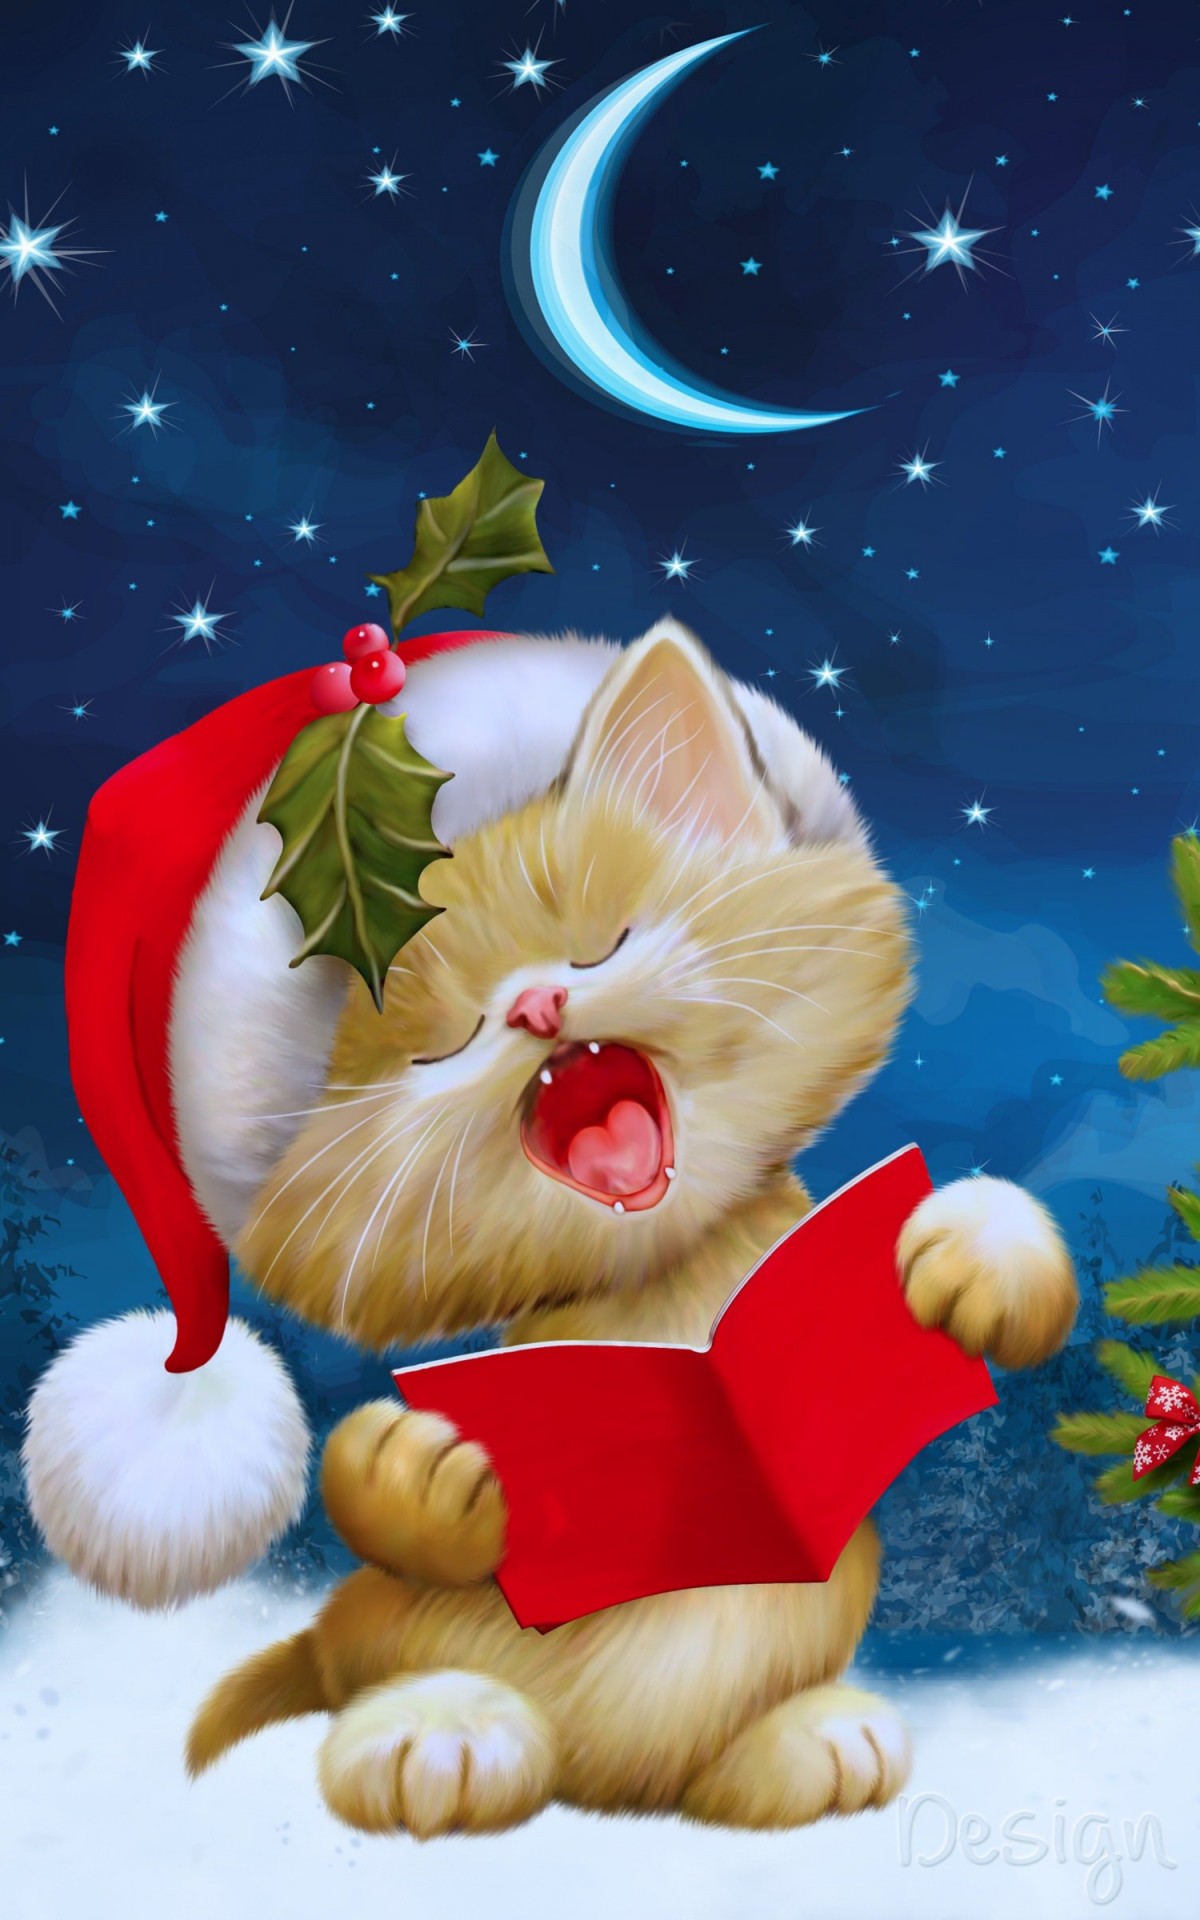 Santa Kitten Singing Christmas Carols Wallpaper for Amazon Kindle Fire HDX